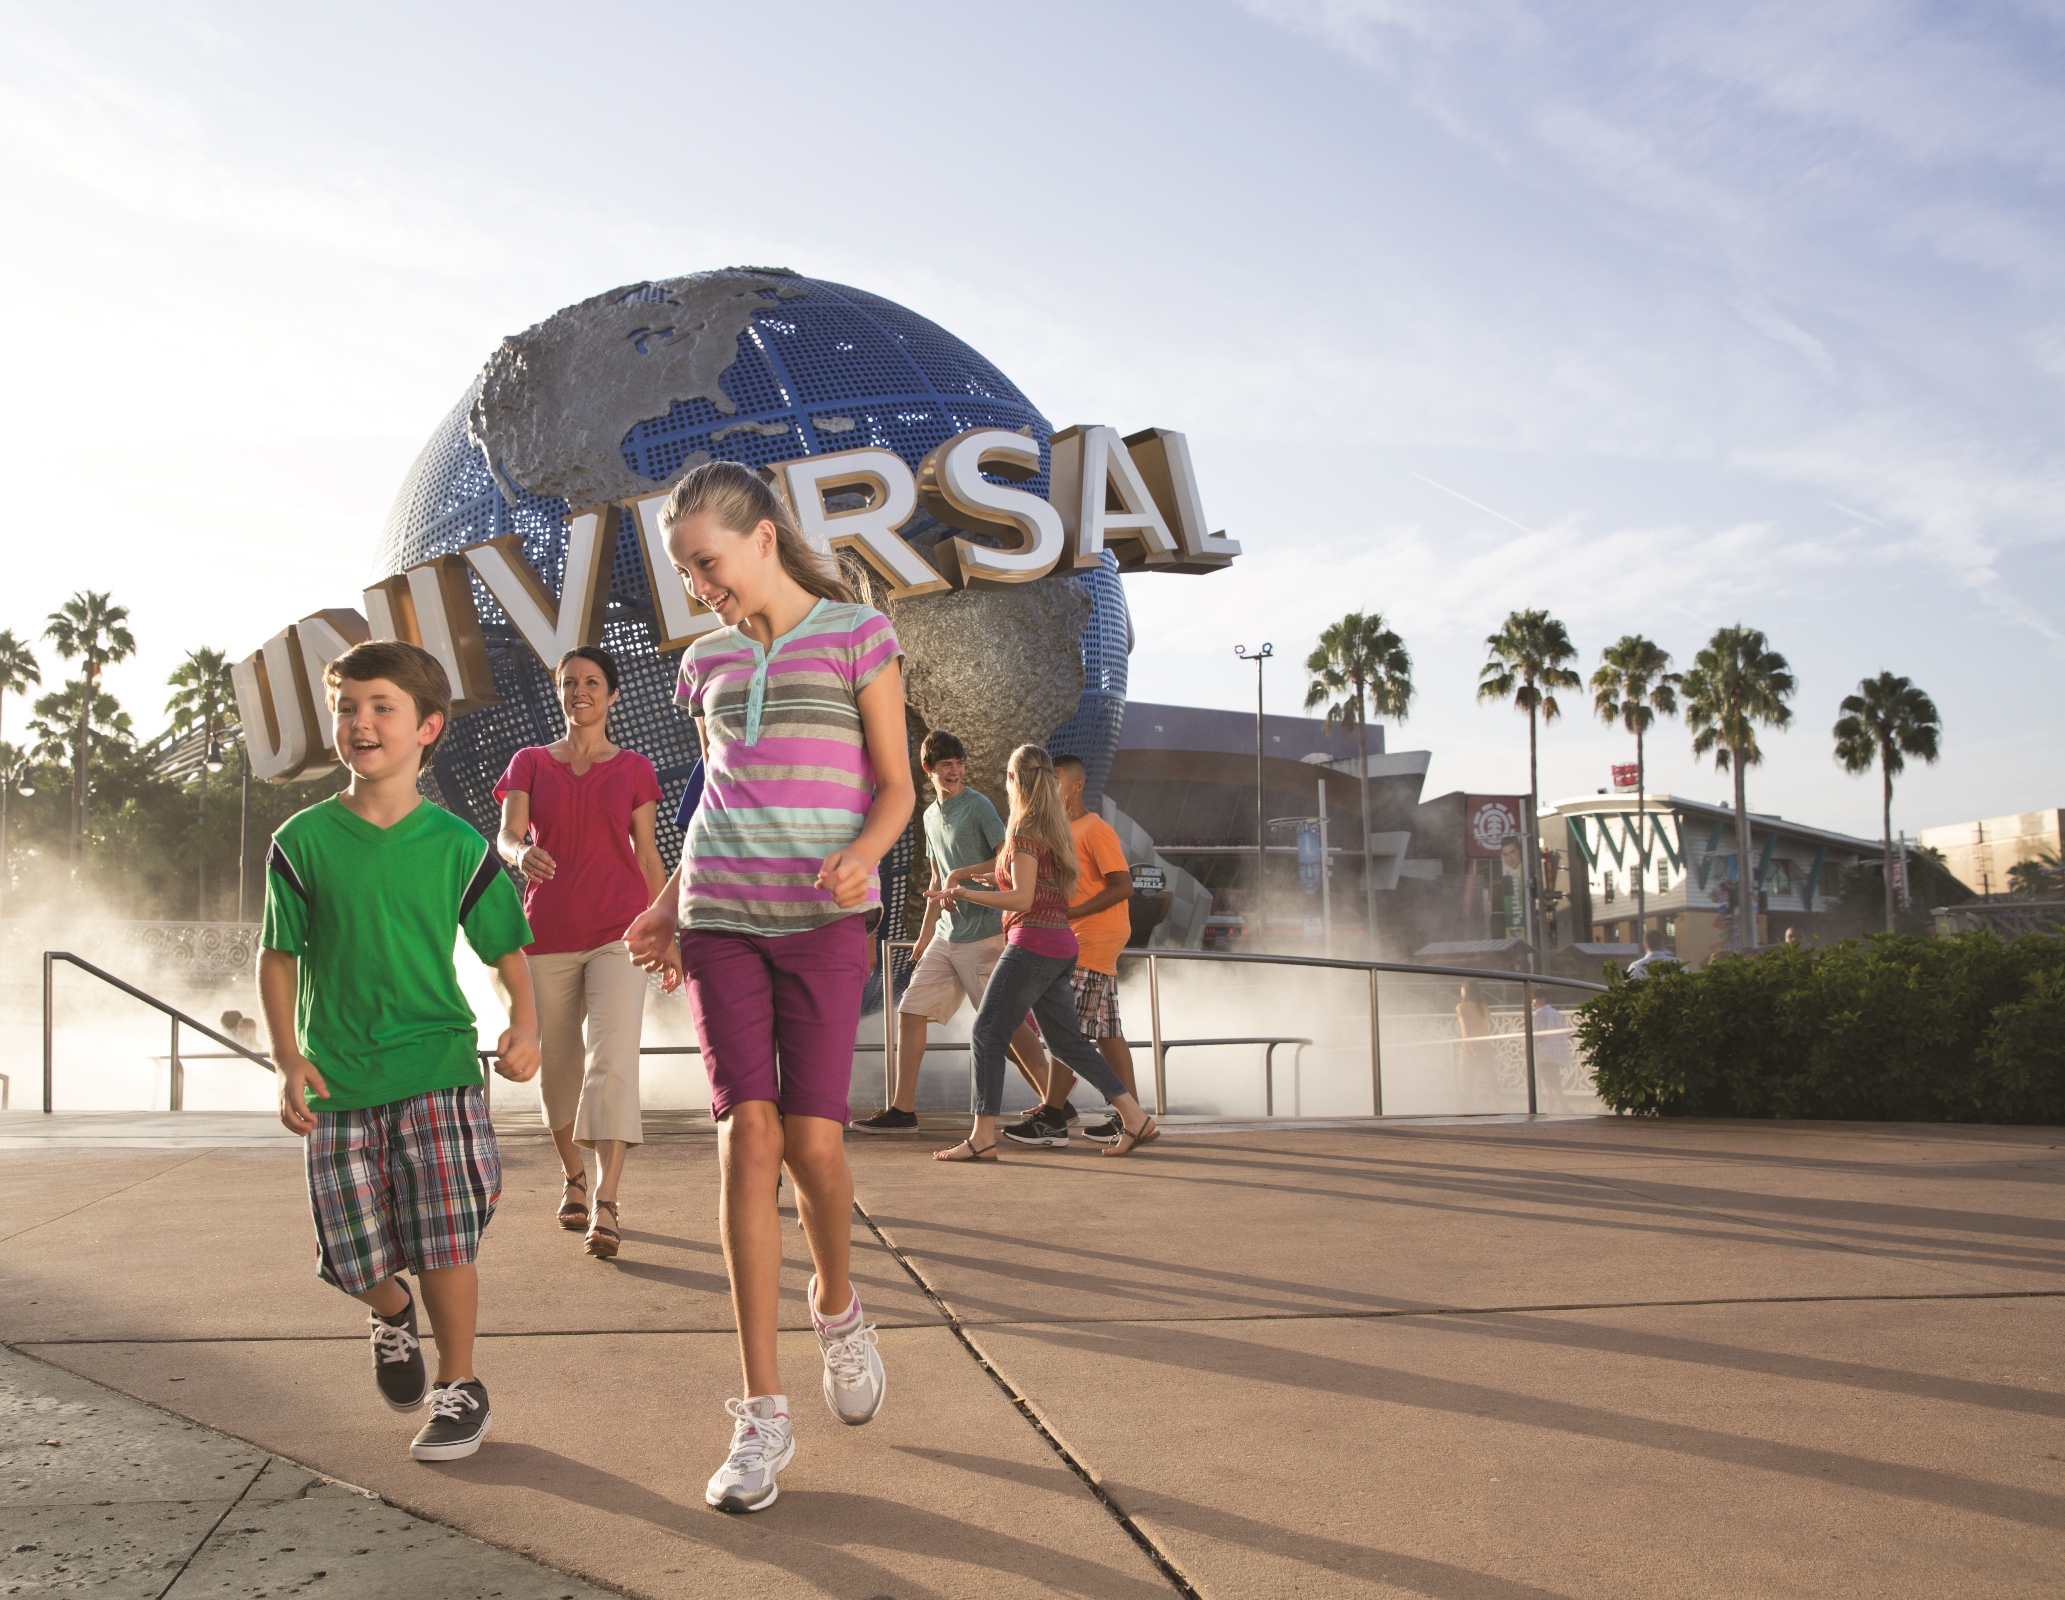 Universal Orlando Resort™ Group and Half Day Ticket Options